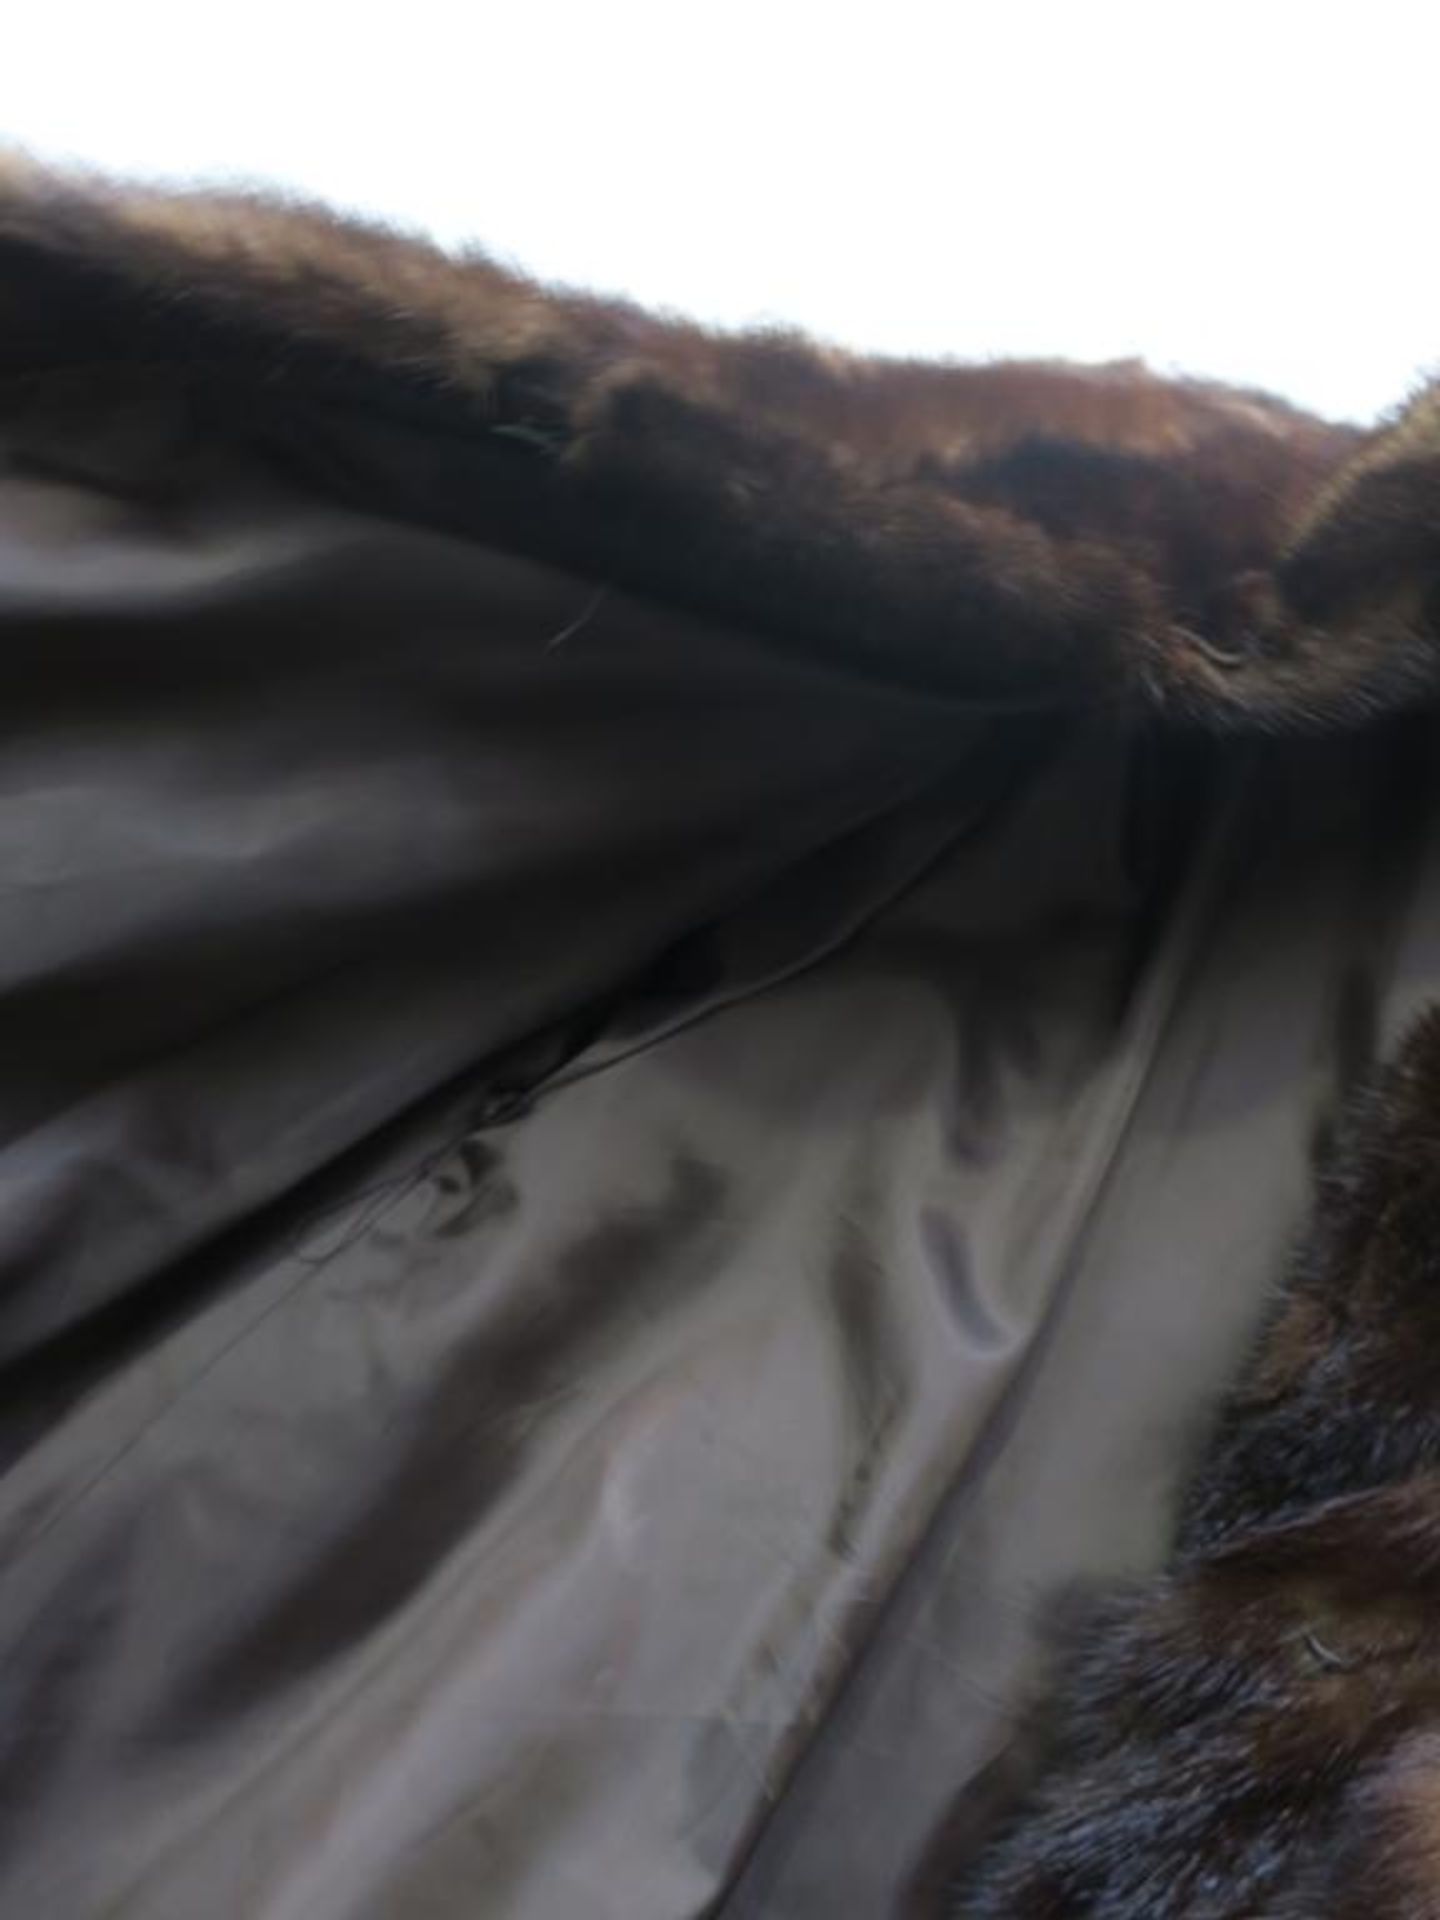 A Belarussian Mink Fur Coat/Jacket- in exceptional condition (est £250-£400) - Image 4 of 4